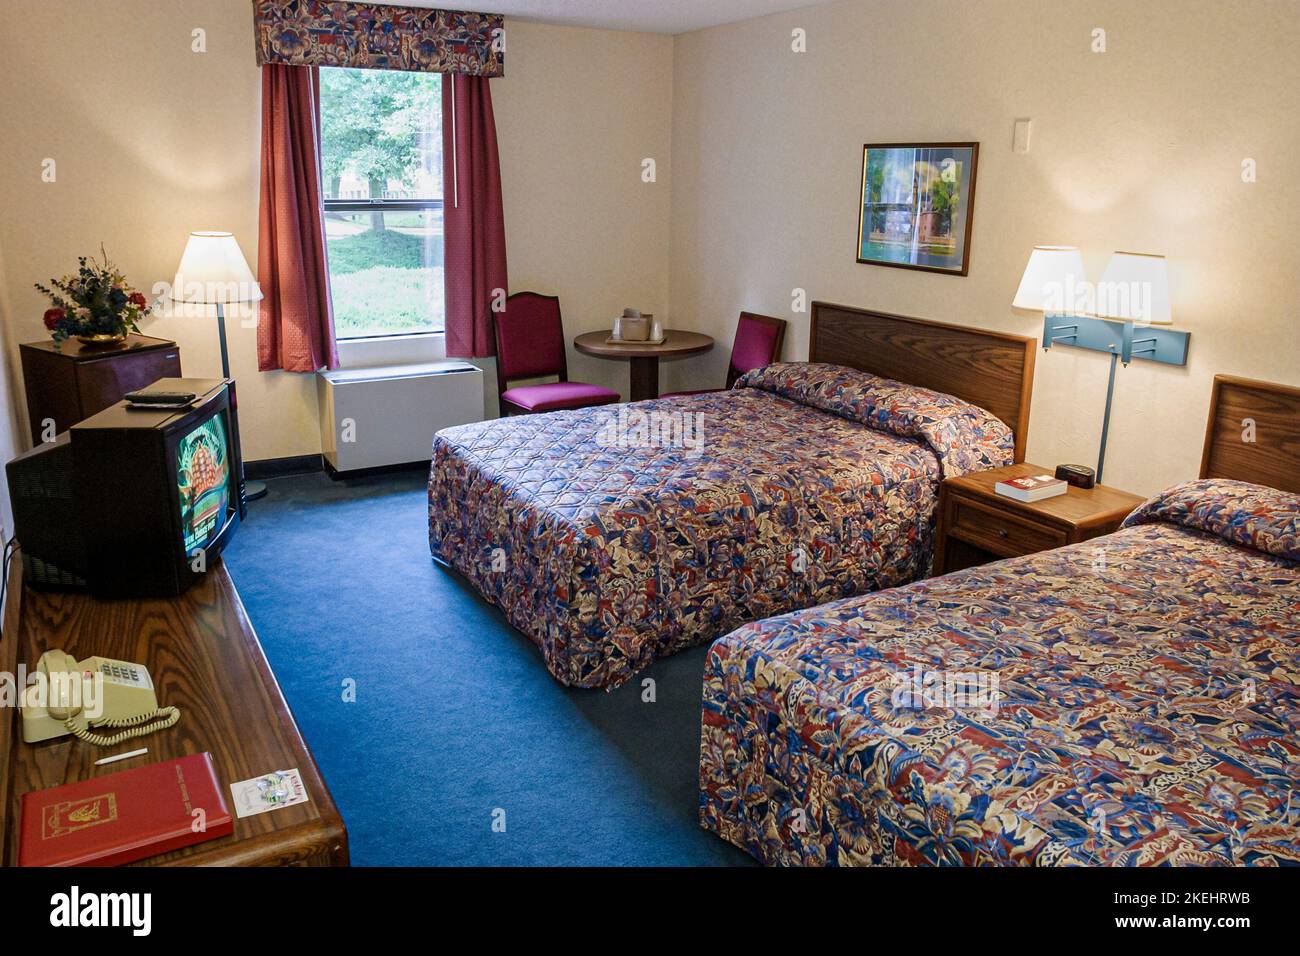 Newport News Virginia,Mulberry Inn,hôtel hôtels hébergement inn motel motels, visiteurs voyage voyage tourisme touristique sites touristiques culture cul Banque D'Images